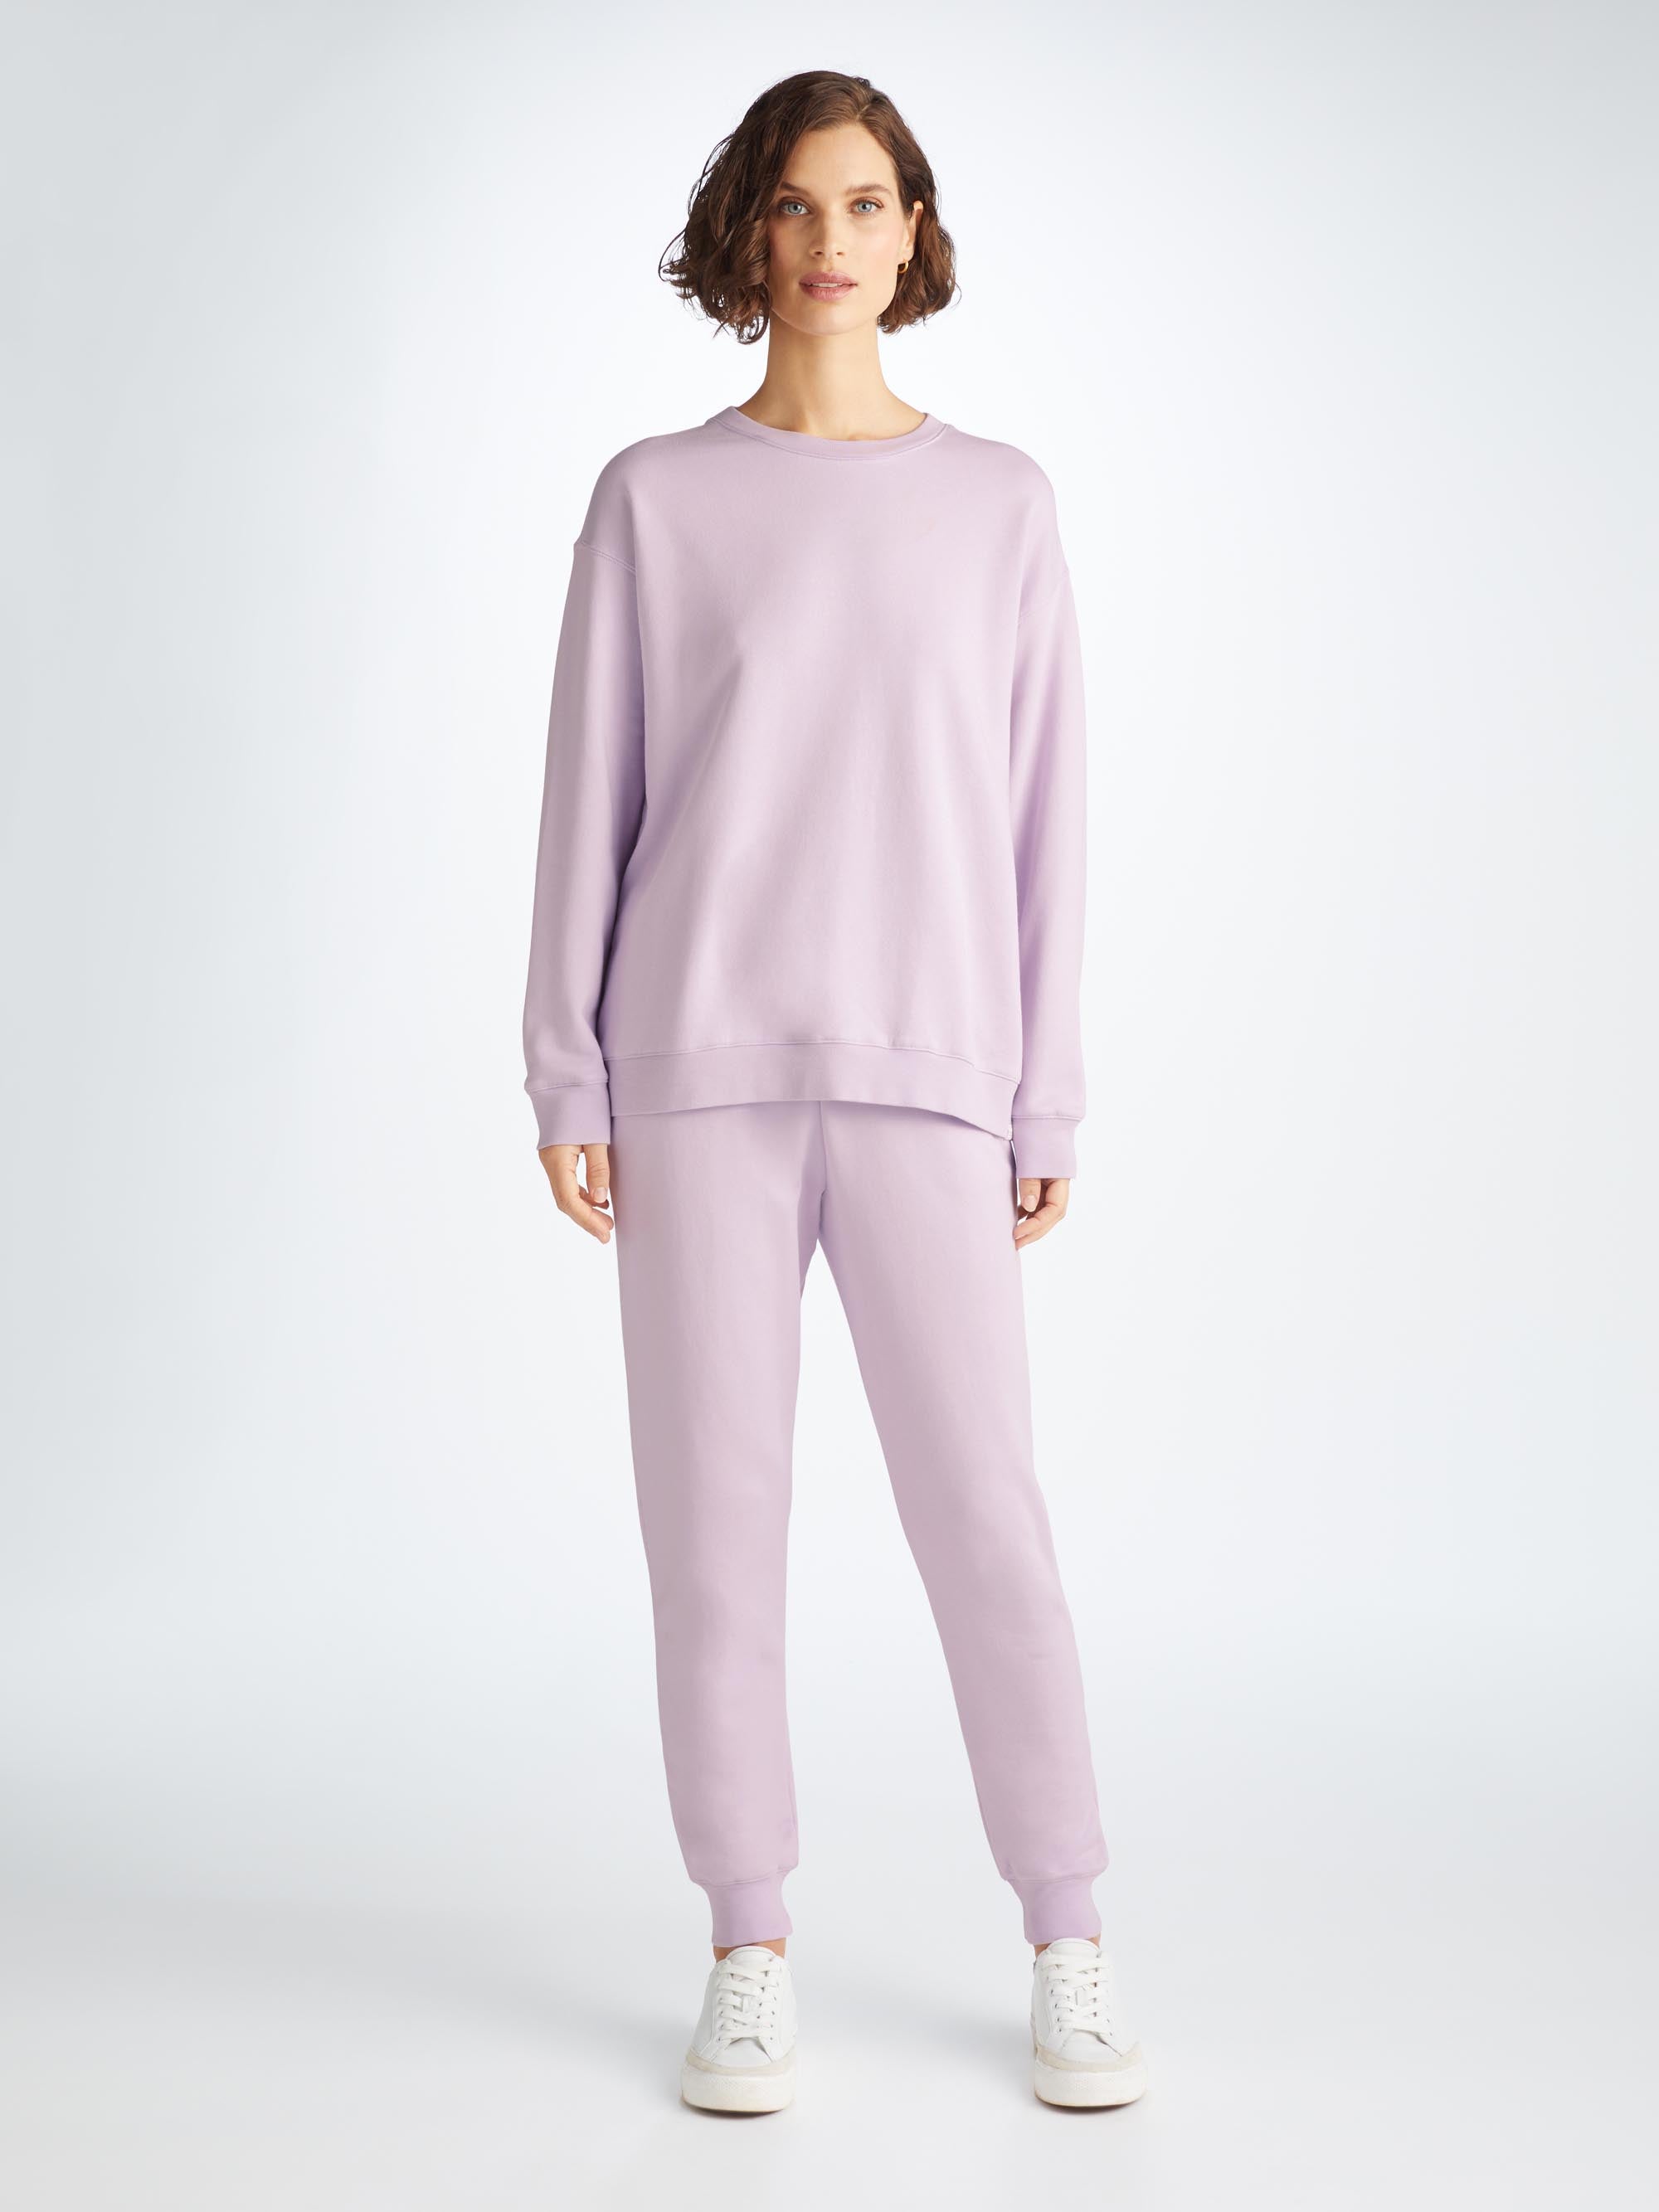 Women's Sweatpants Quinn Cotton Modal Lilac